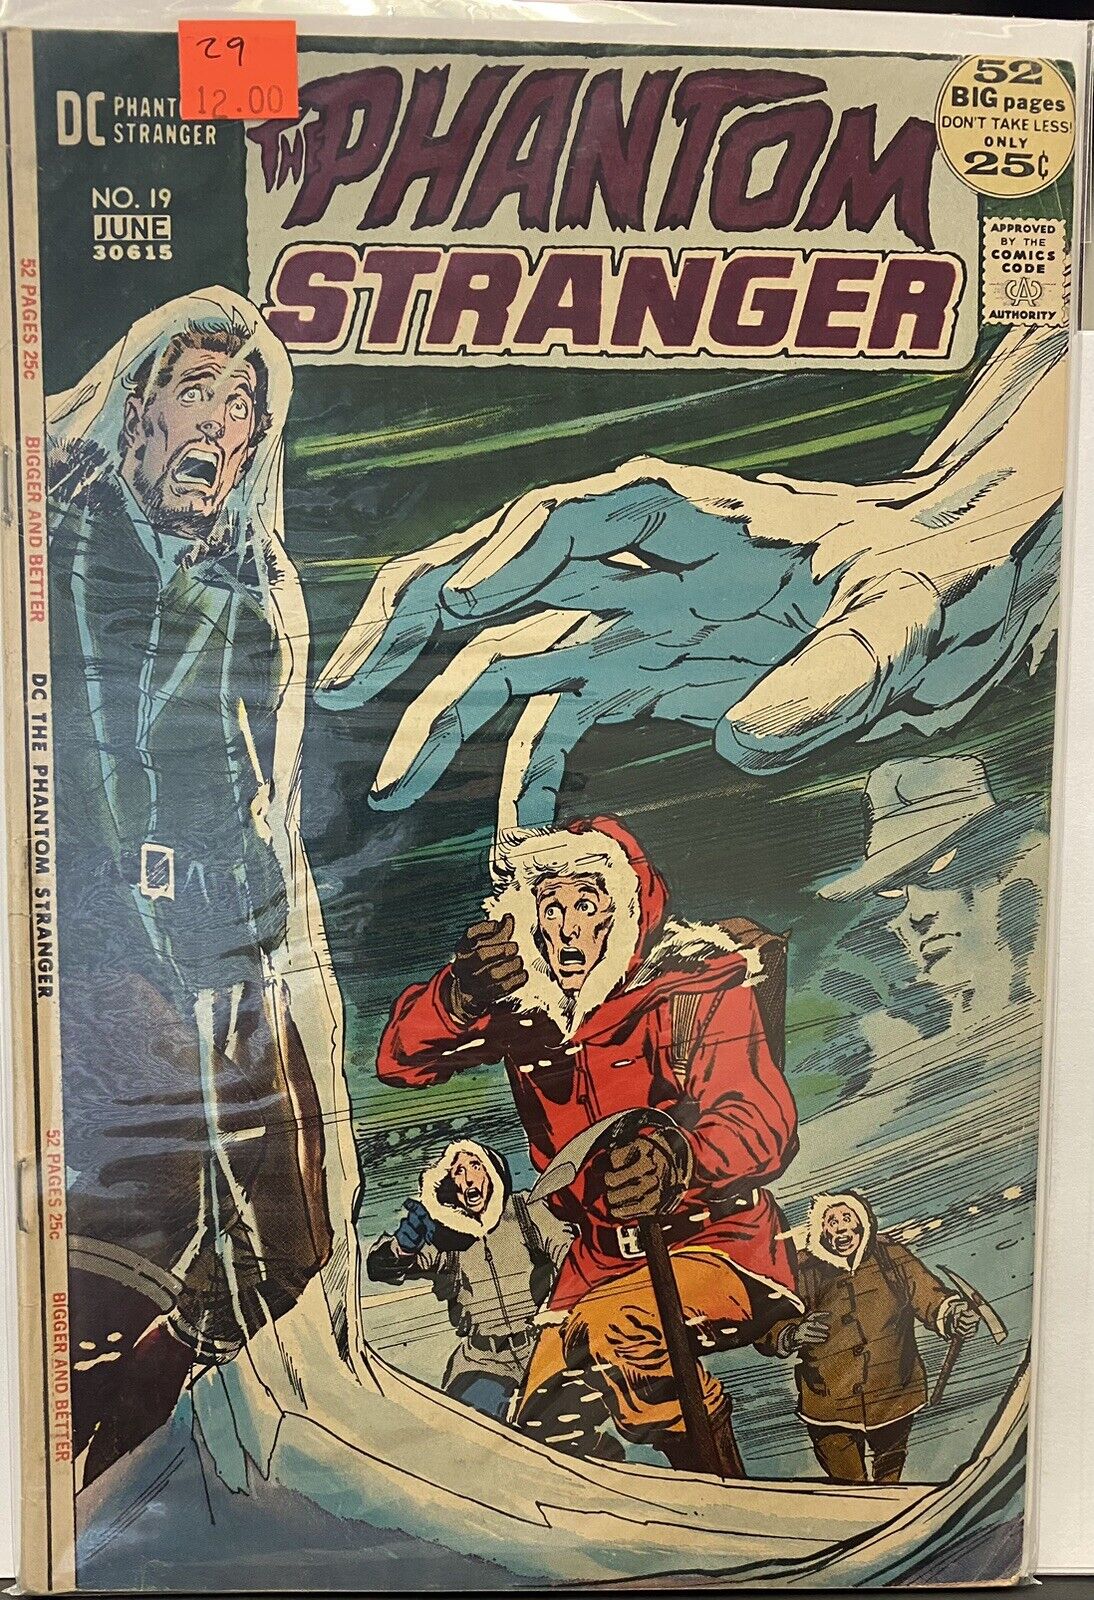 The Phantom Stranger #19 DC Comic Horror Silver Age Neal Adams Cover